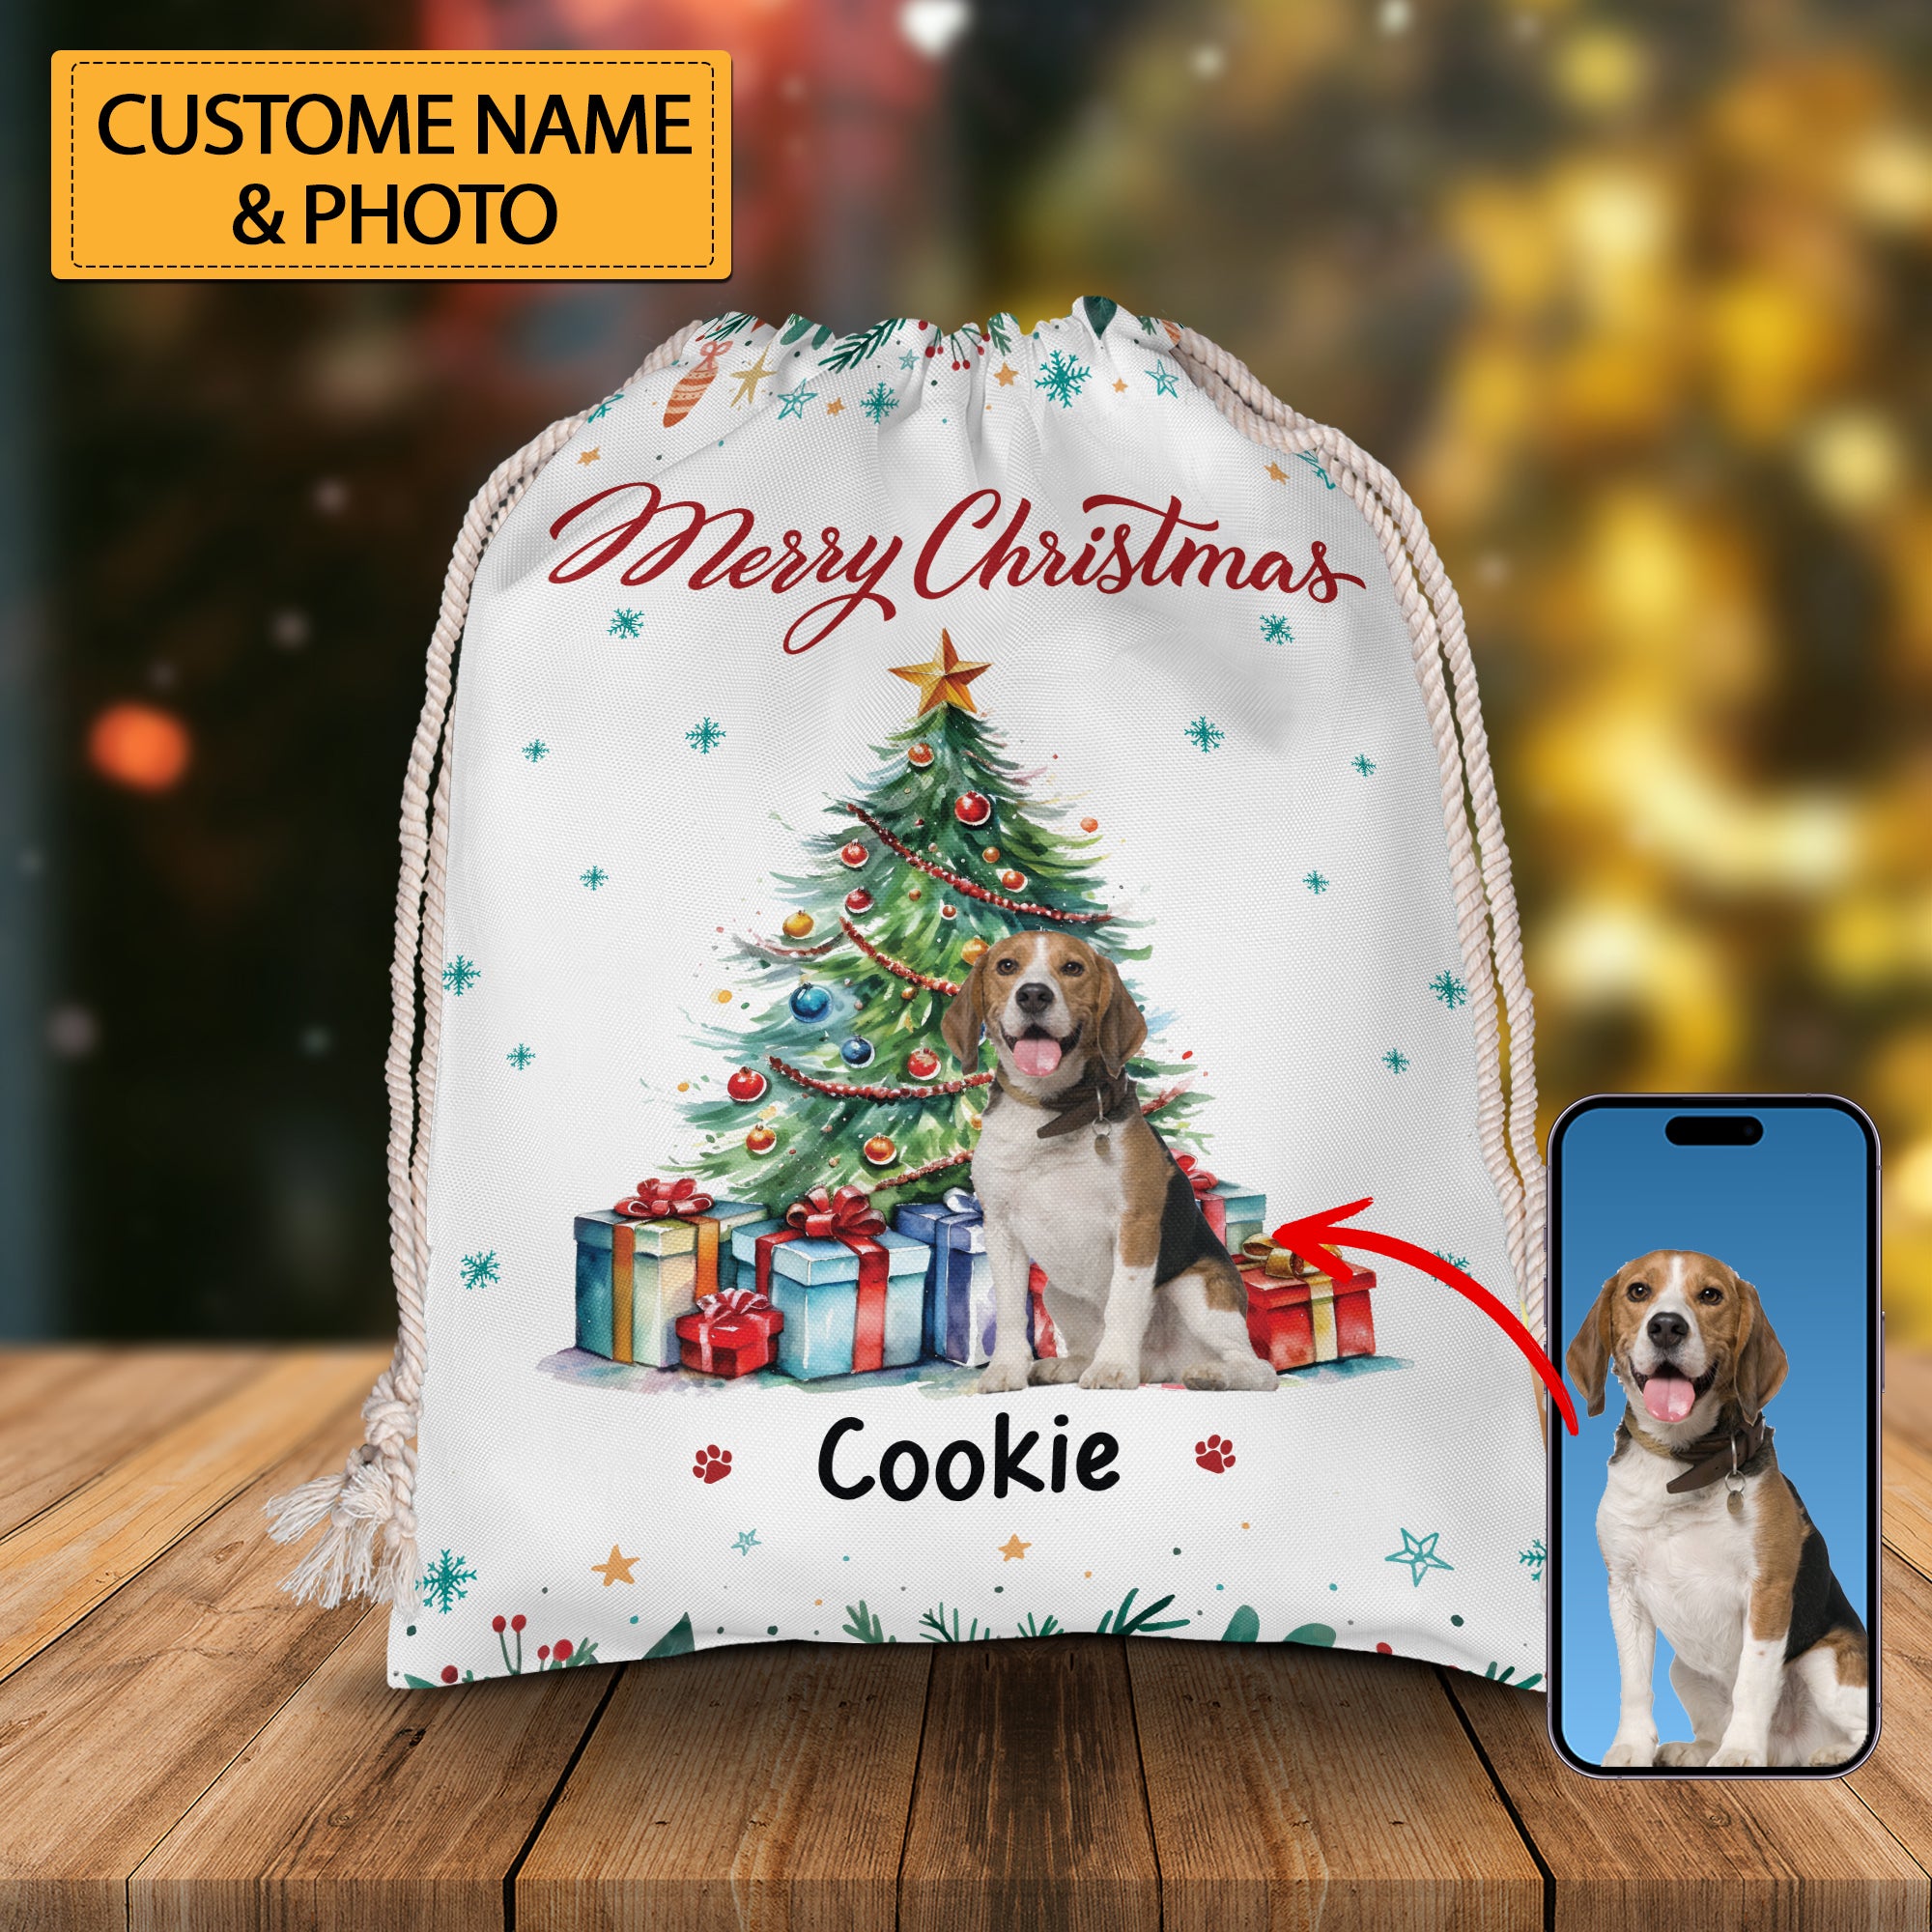 Christmas Tree And Pet - Custom Photo And Name, Personalized String Bag, Christmas Gift